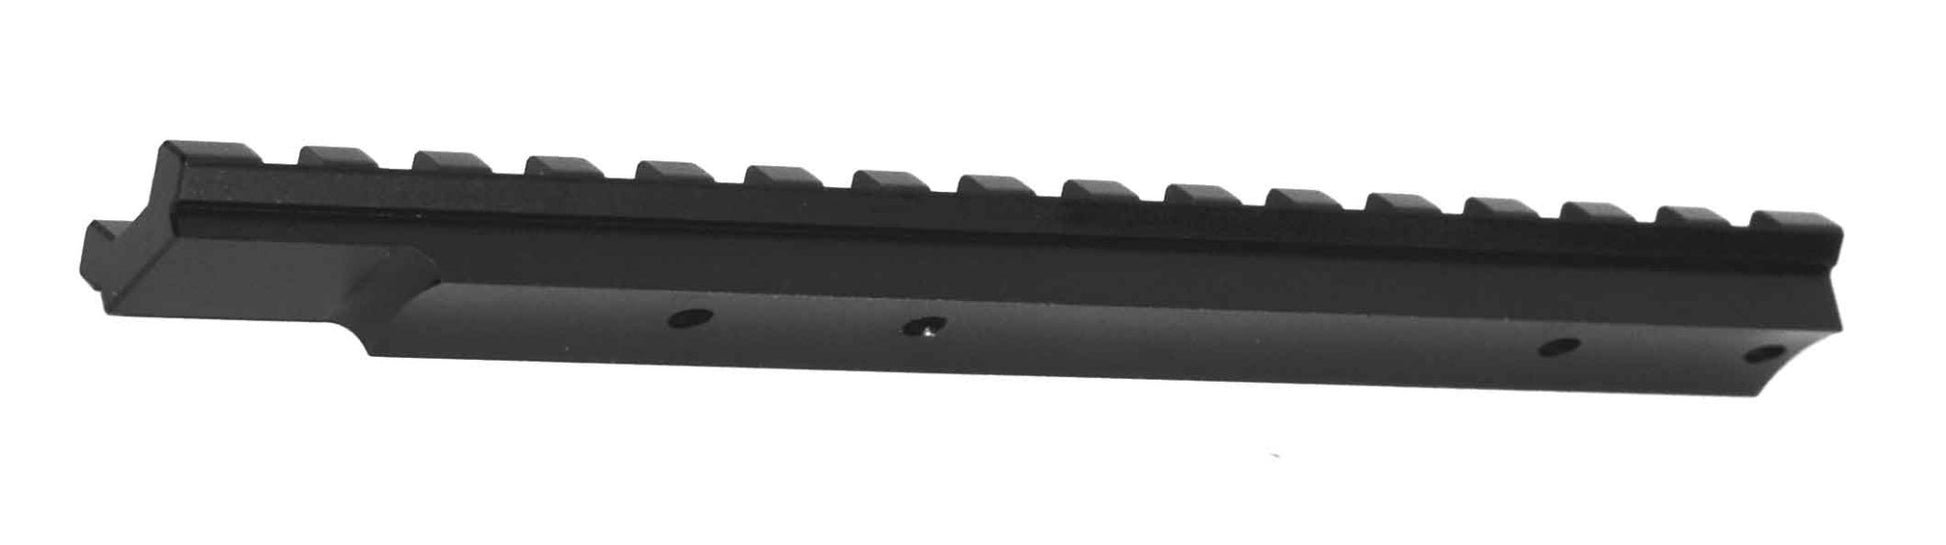 Winchester 1300 model picatinny base mount adapter. - TRINITY SUPPLY INC